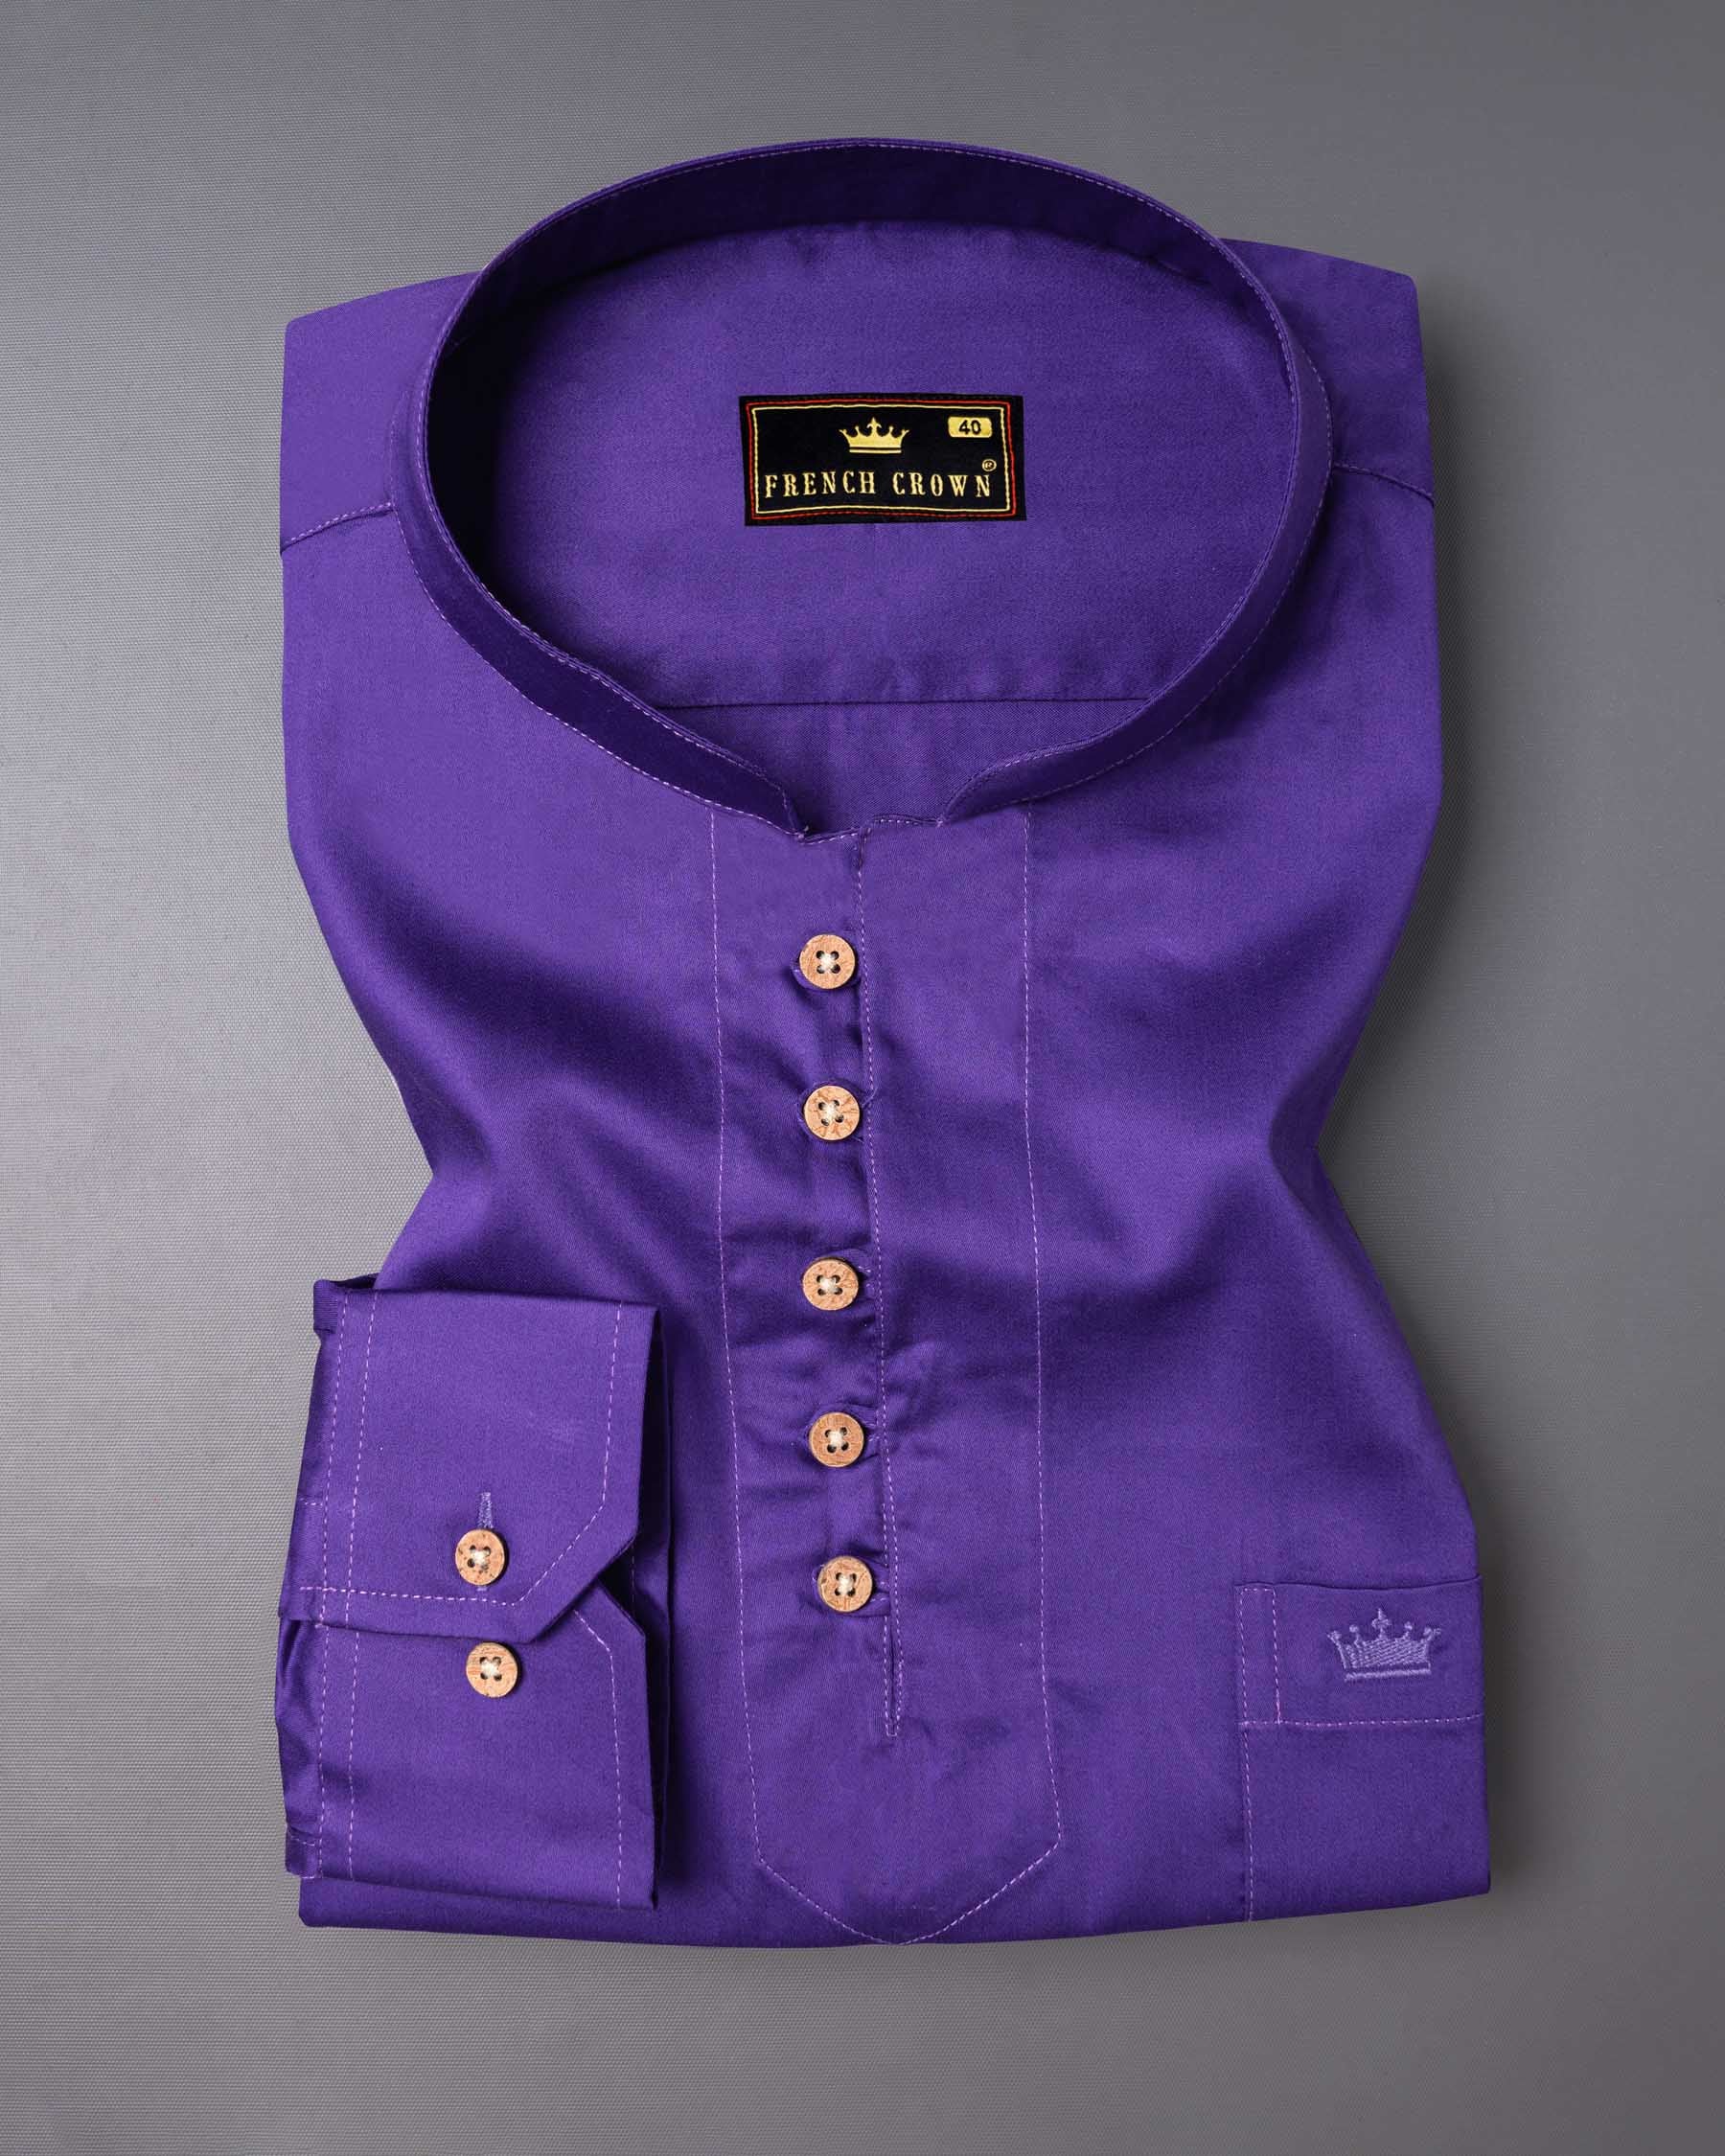 Windsor Purple Super Soft Premium Cotton Kurta Shirt 6422-KS-38, 6422-KS-H-38, 6422-KS-39, 6422-KS-H-39, 6422-KS-40, 6422-KS-H-40, 6422-KS-42, 6422-KS-H-42, 6422-KS-44, 6422-KS-H-44, 6422-KS-46, 6422-KS-H-46, 6422-KS-48, 6422-KS-H-48, 6422-KS-50, 6422-KS-H-50, 6422-KS-52, 6422-KS-H-52